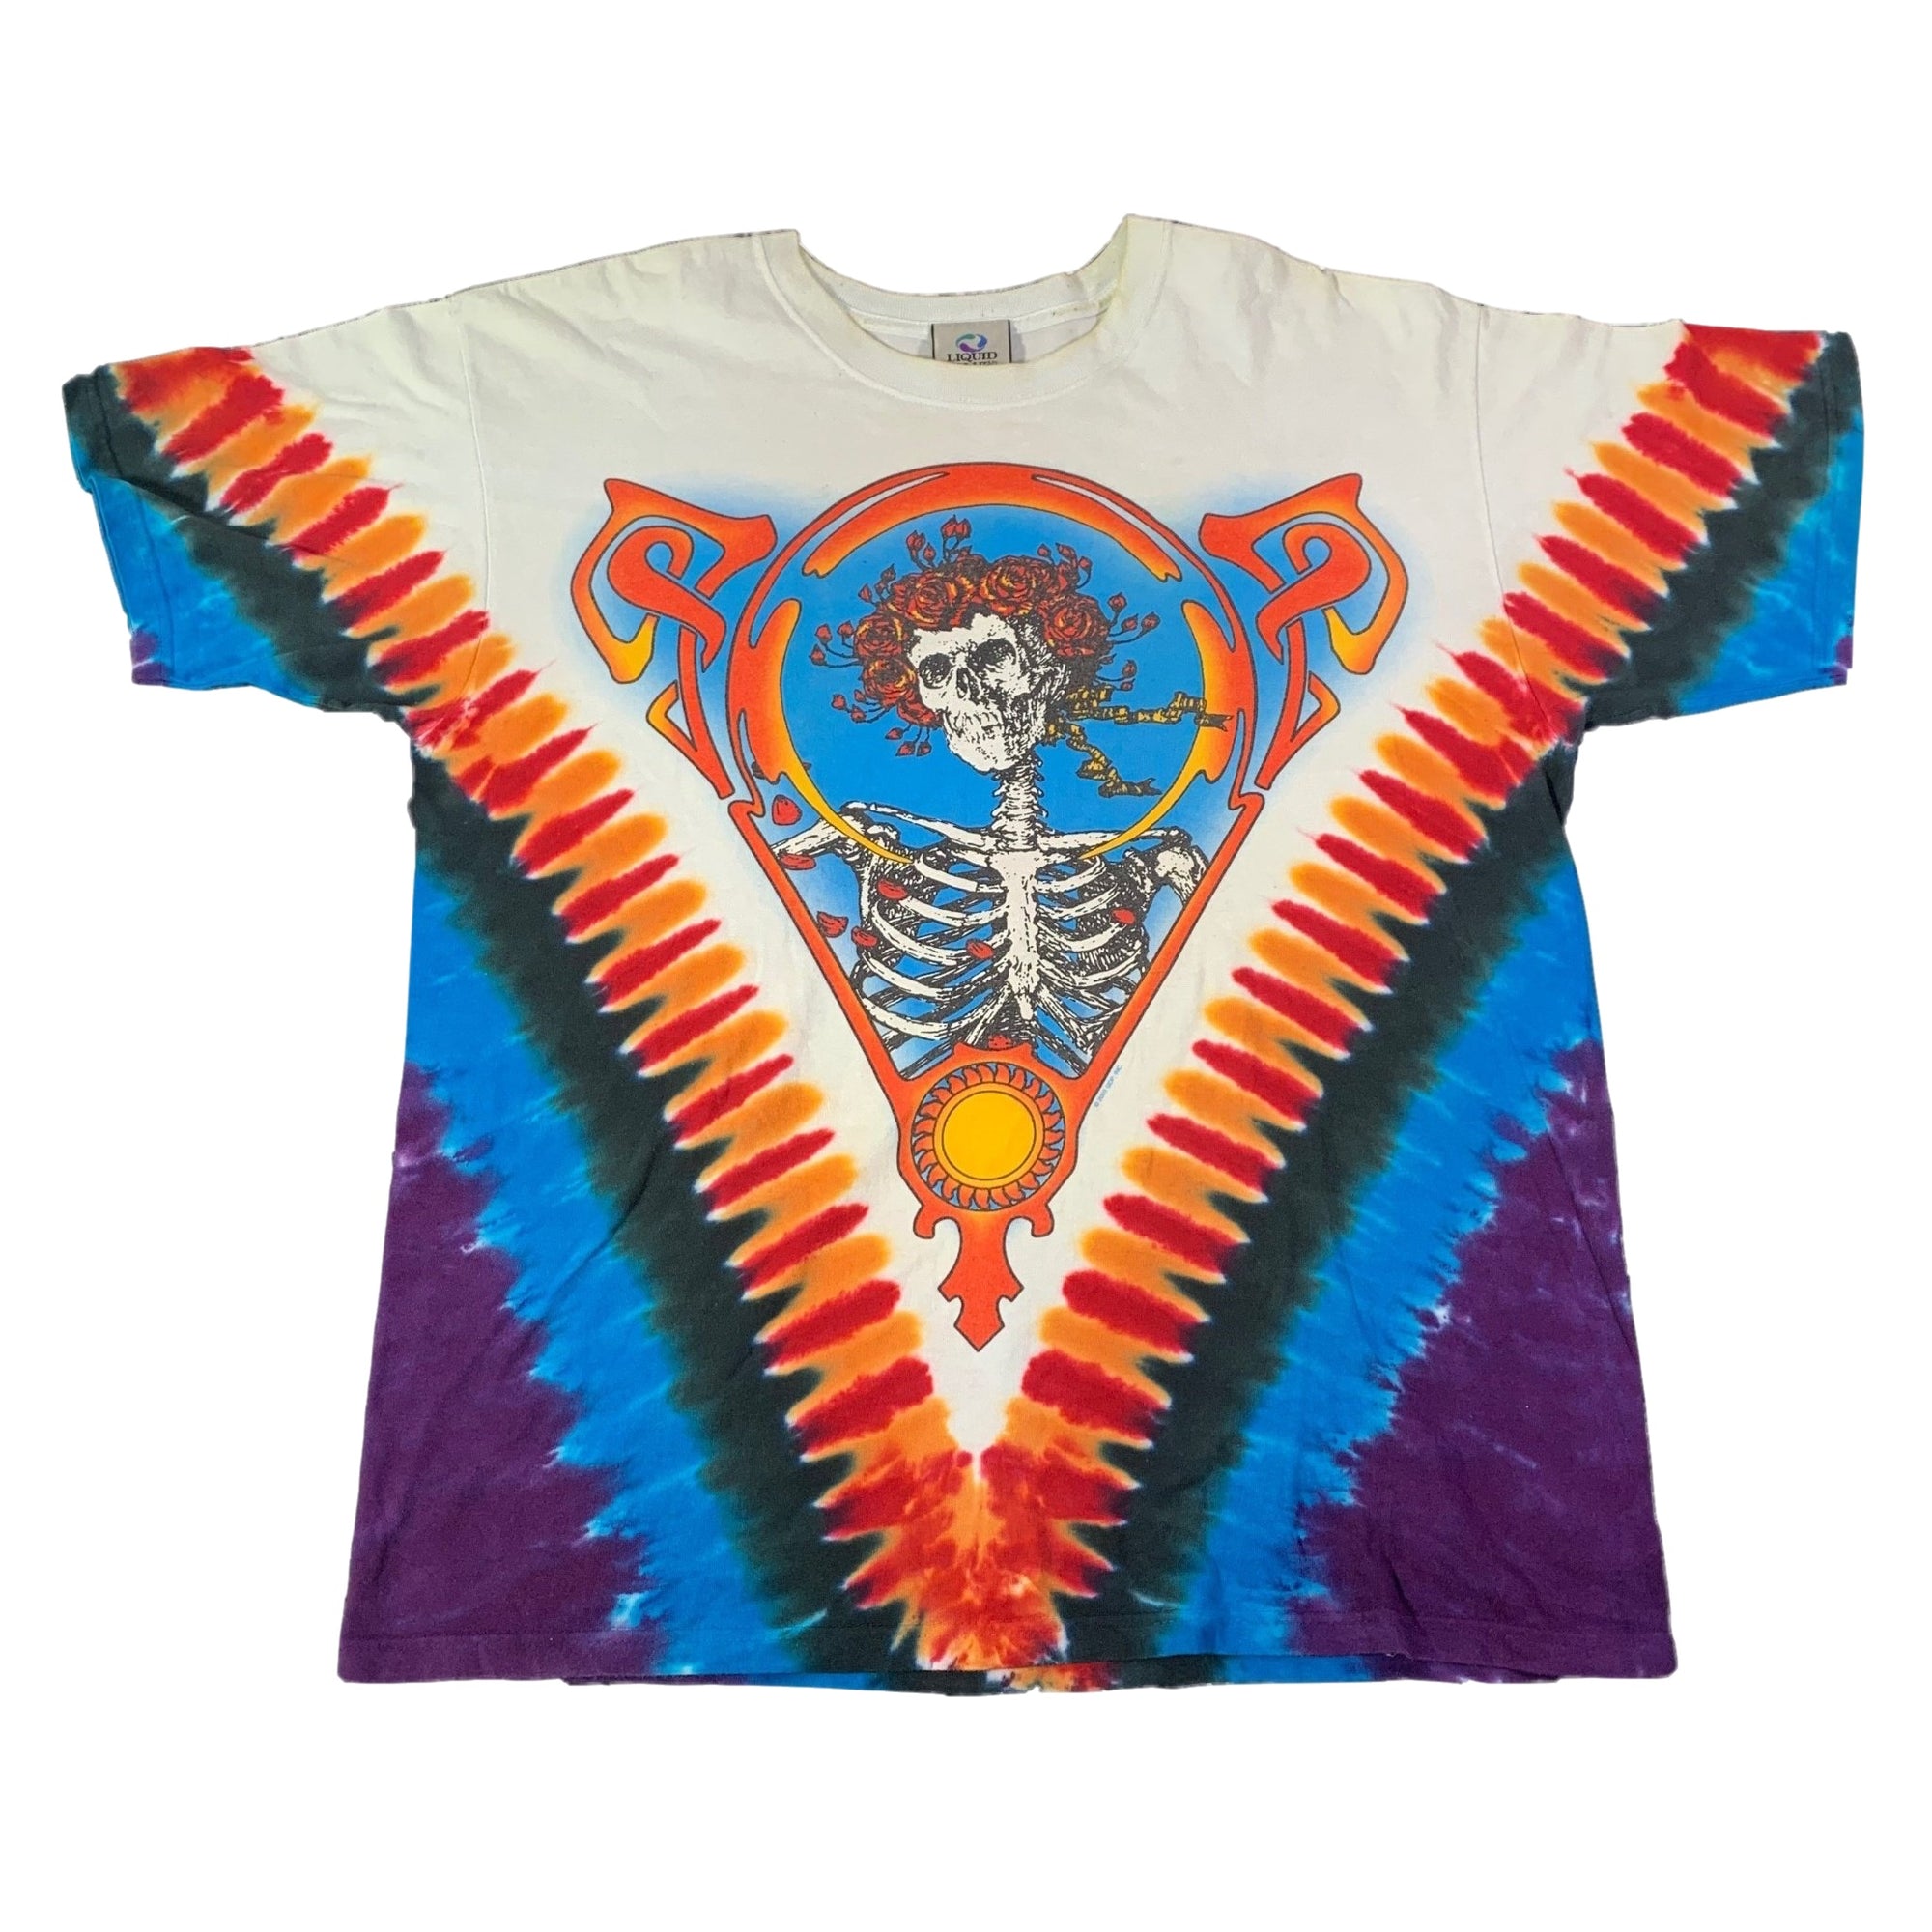 Vintage Grateful Dead "Skull And Roses" Tie Dye T-Shirt - jointcustodydc